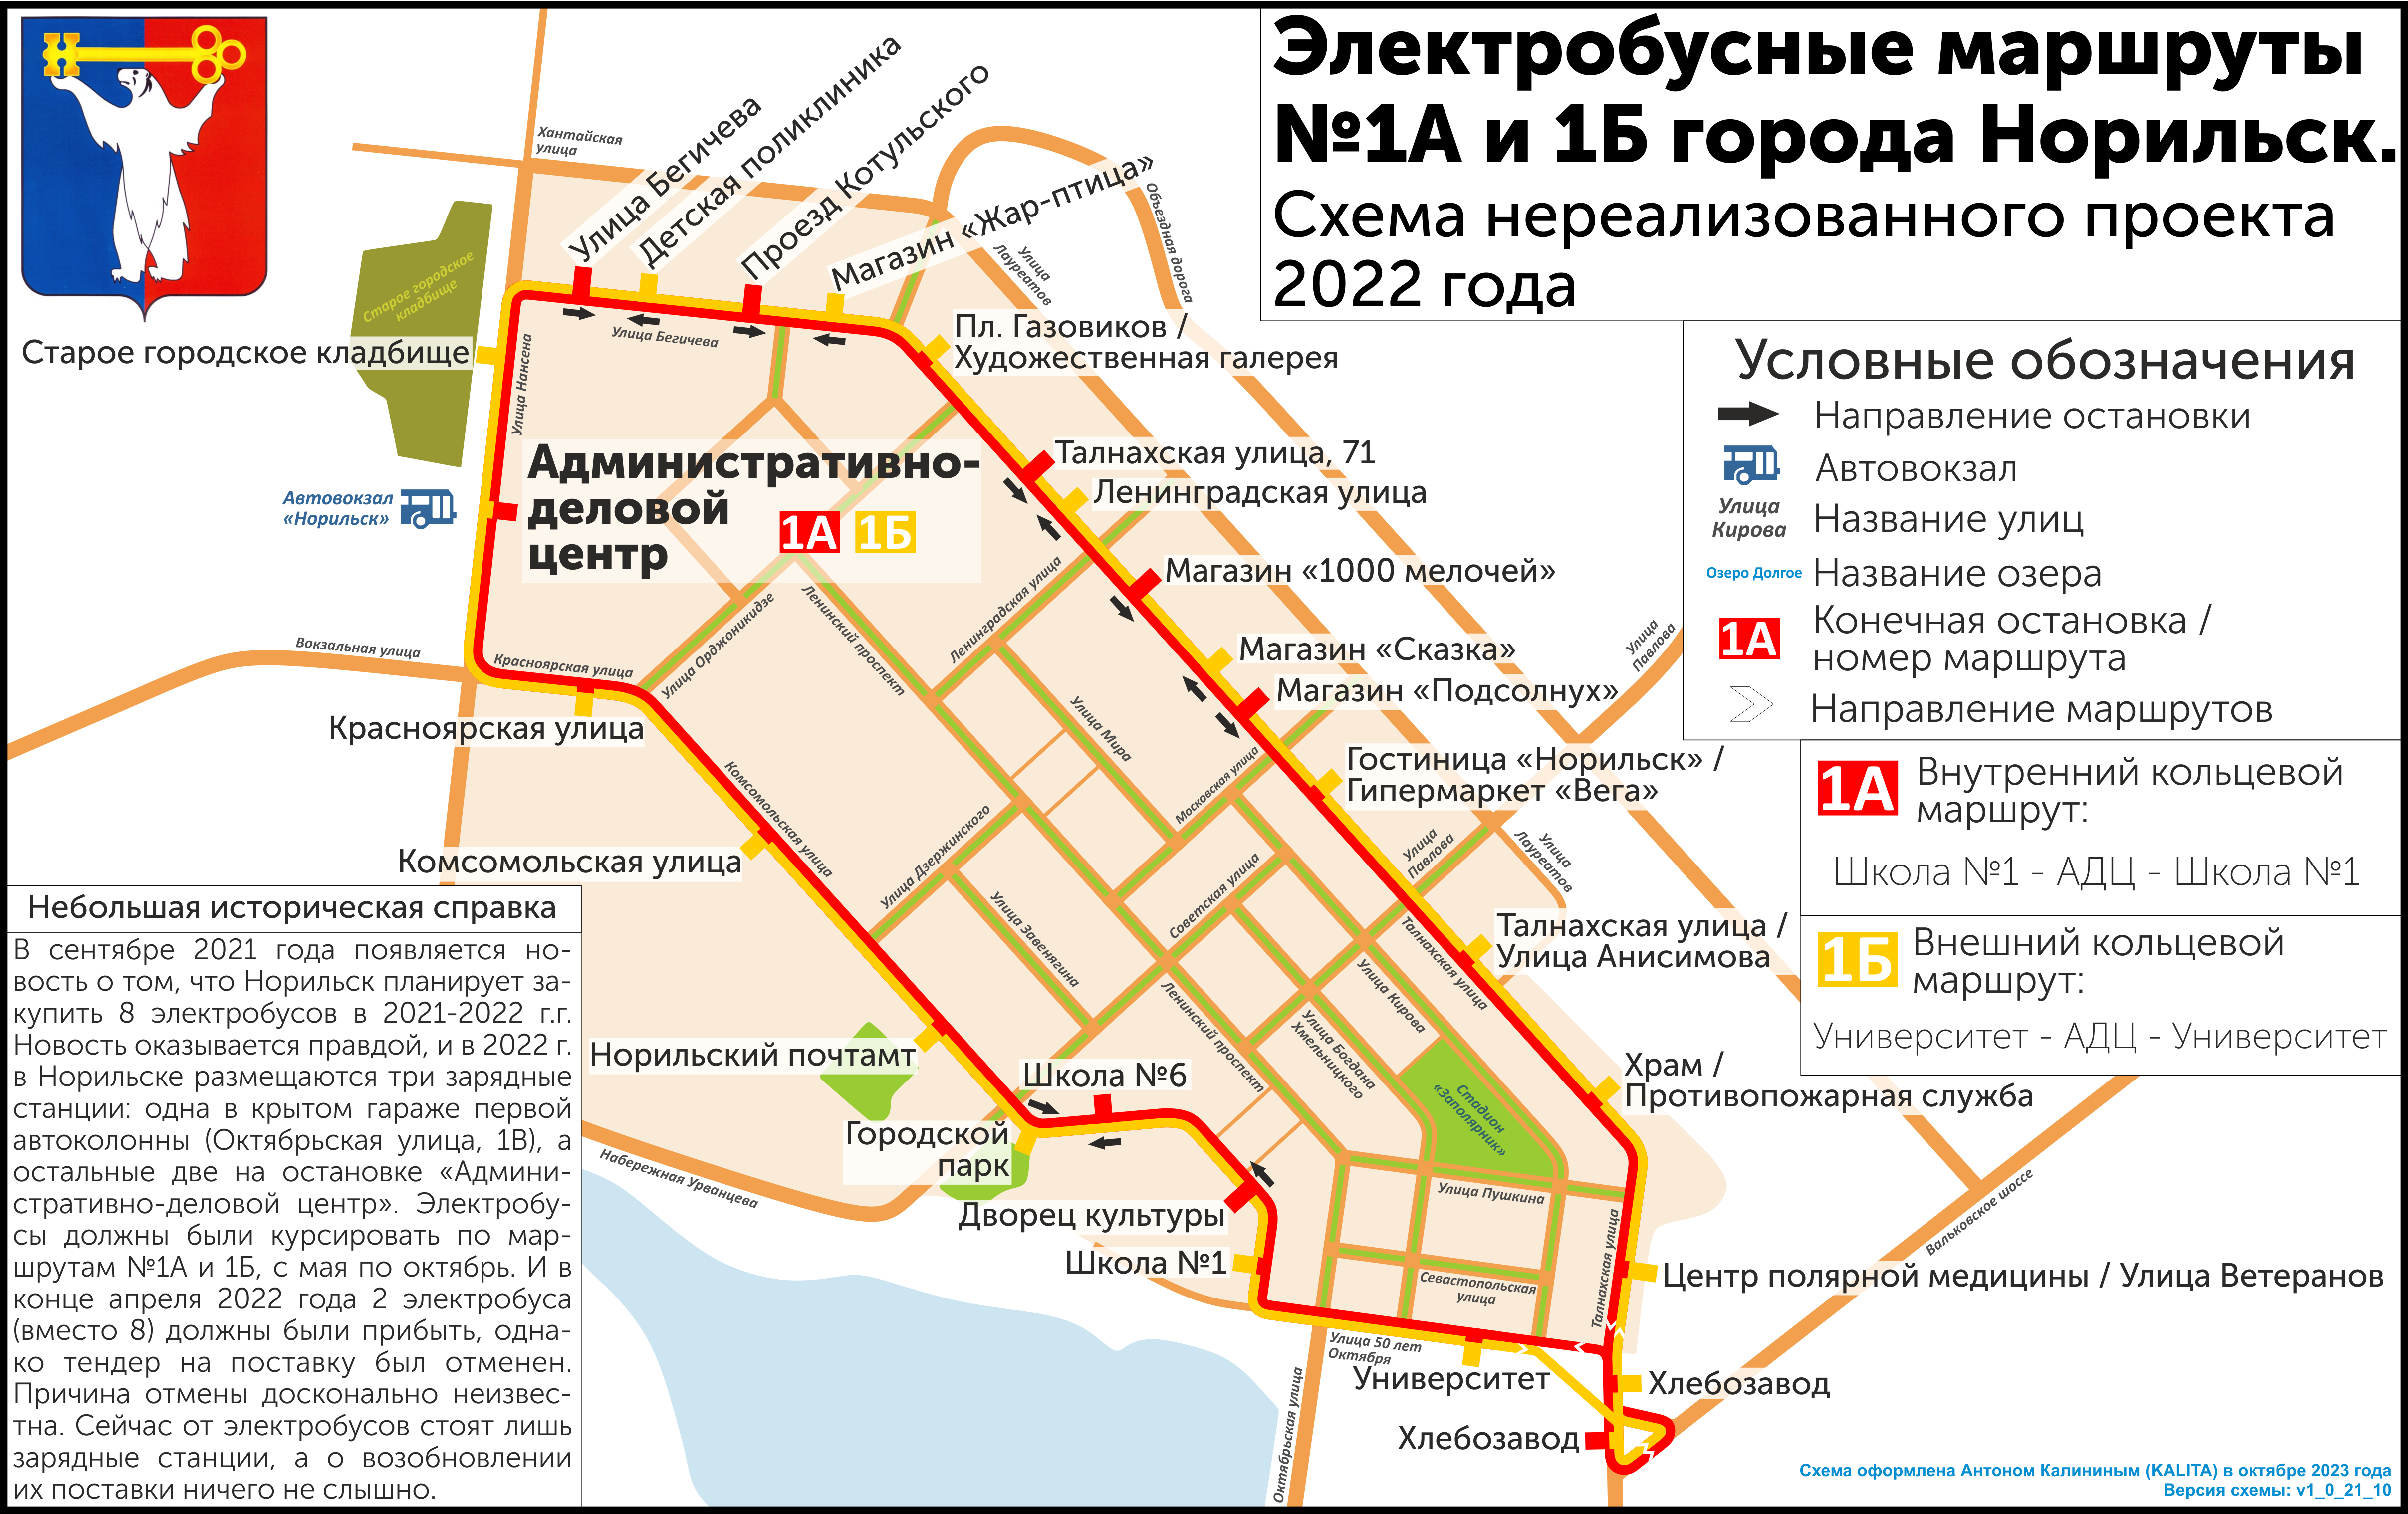 Norilsk — Maps; Norilsk — Unrealized Rechargeable Electric Bus Project (2022)